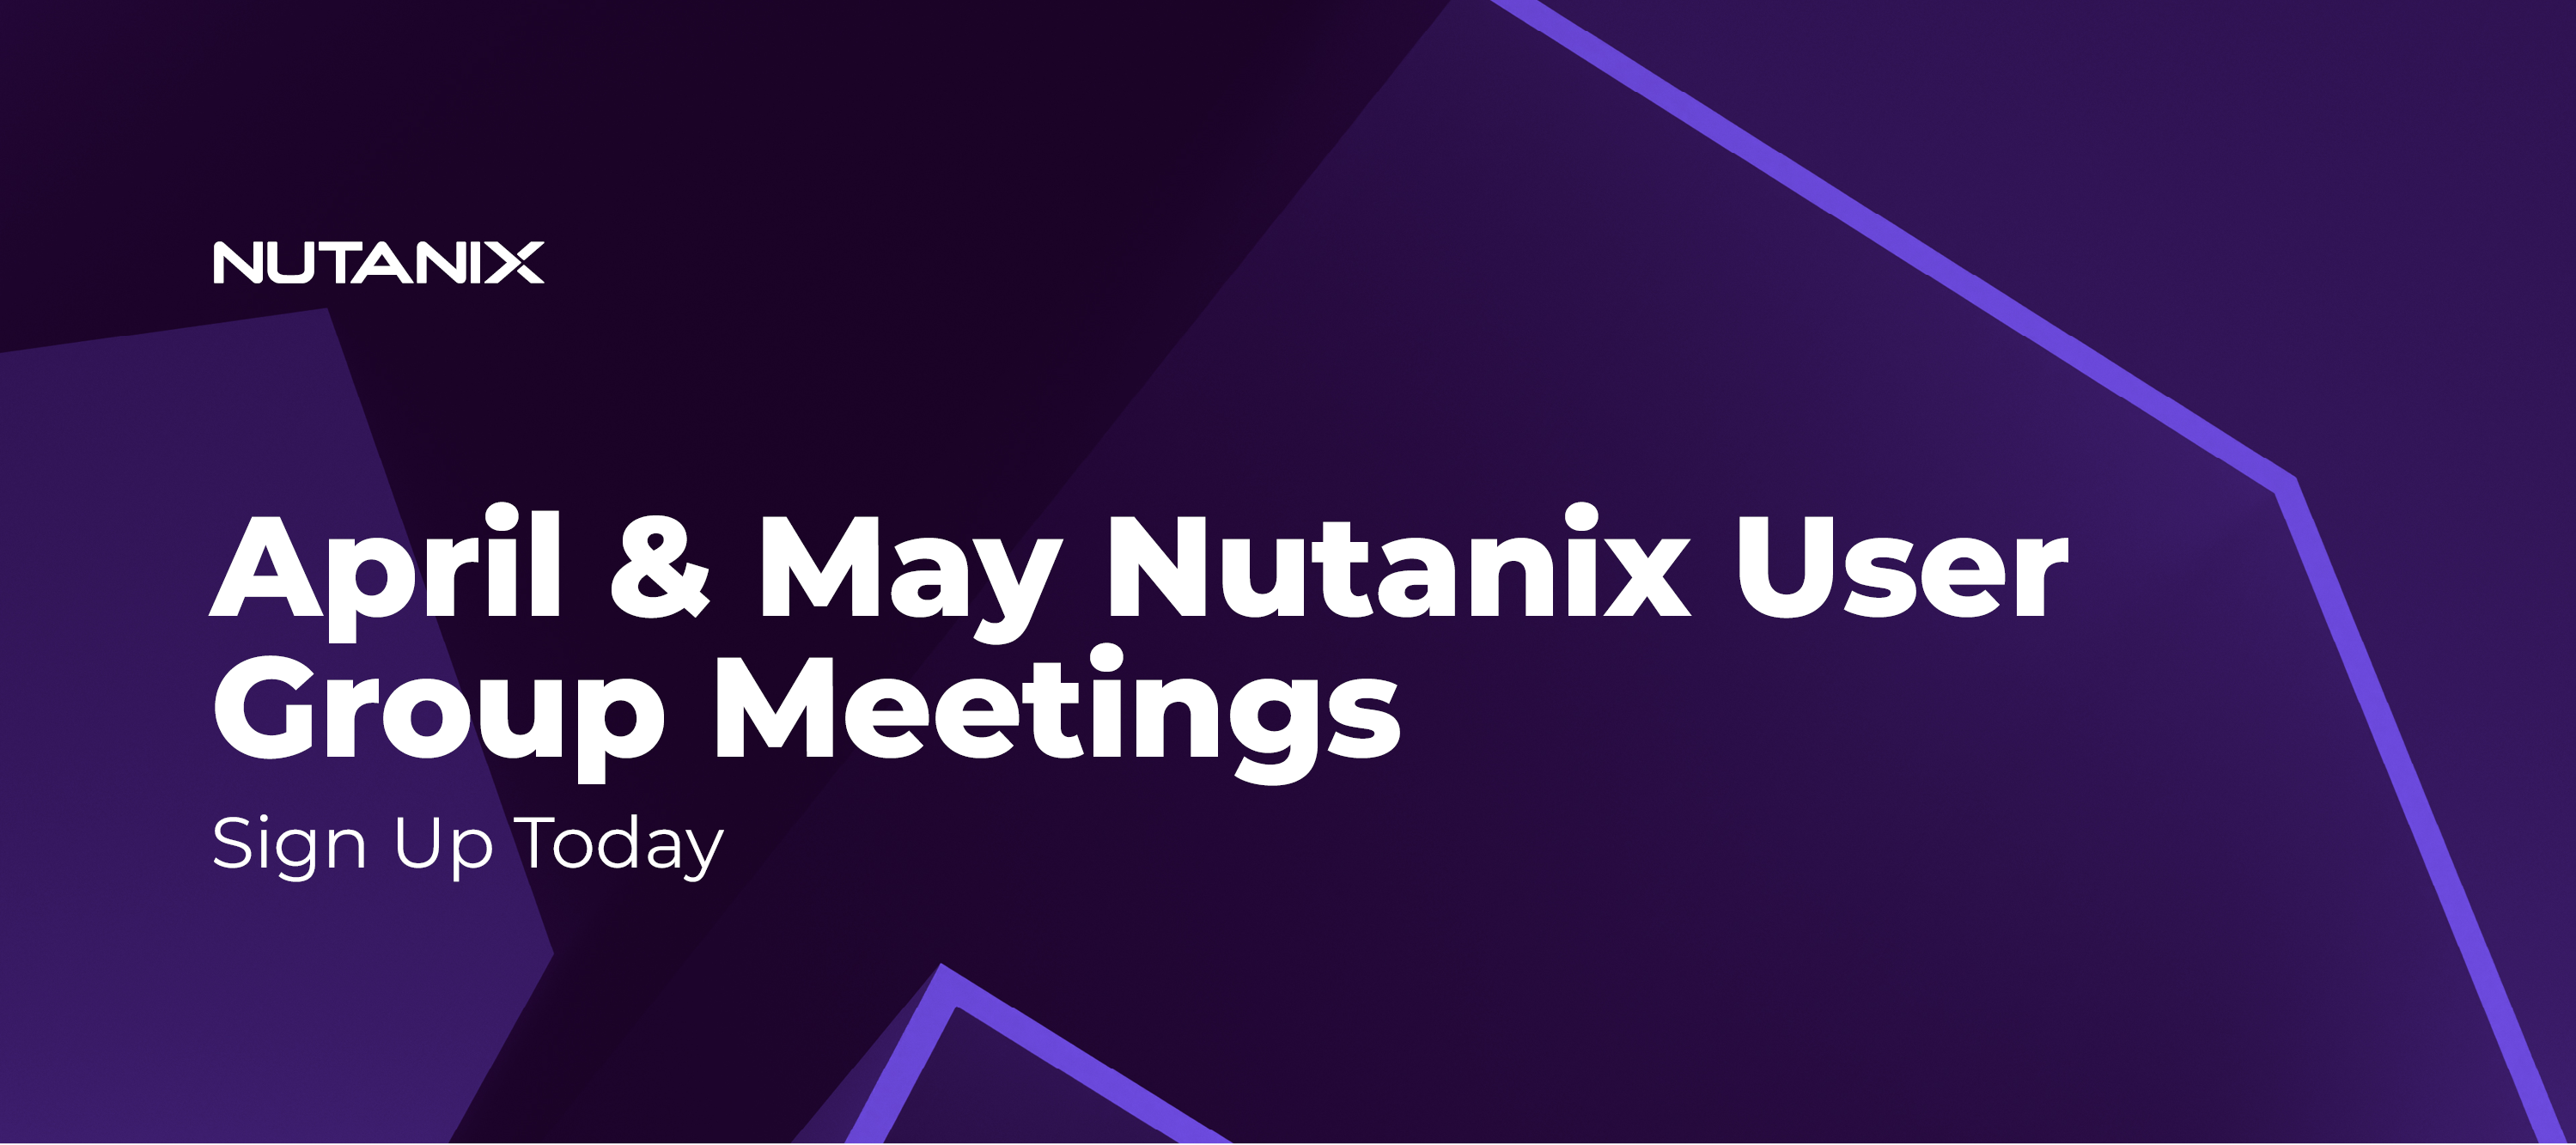 Nutanix User Group Meetings Happening in April and May